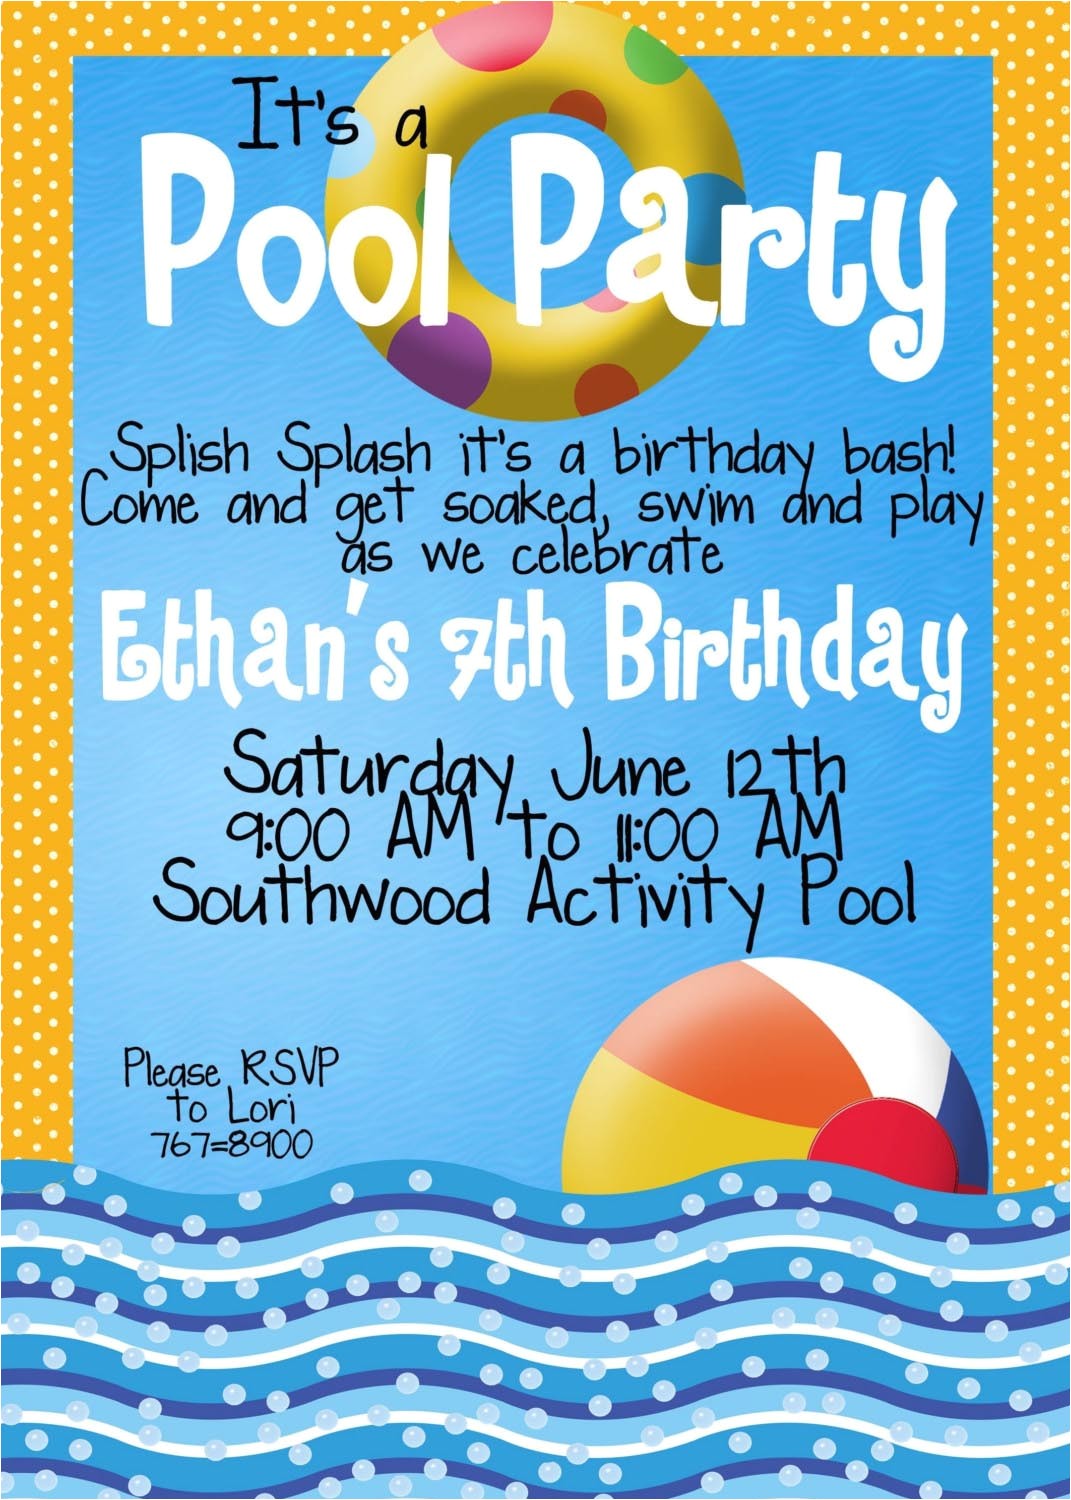 Pool Party Invite Wording Kid Pool Party Invitation Wording Backyard Design Ideas